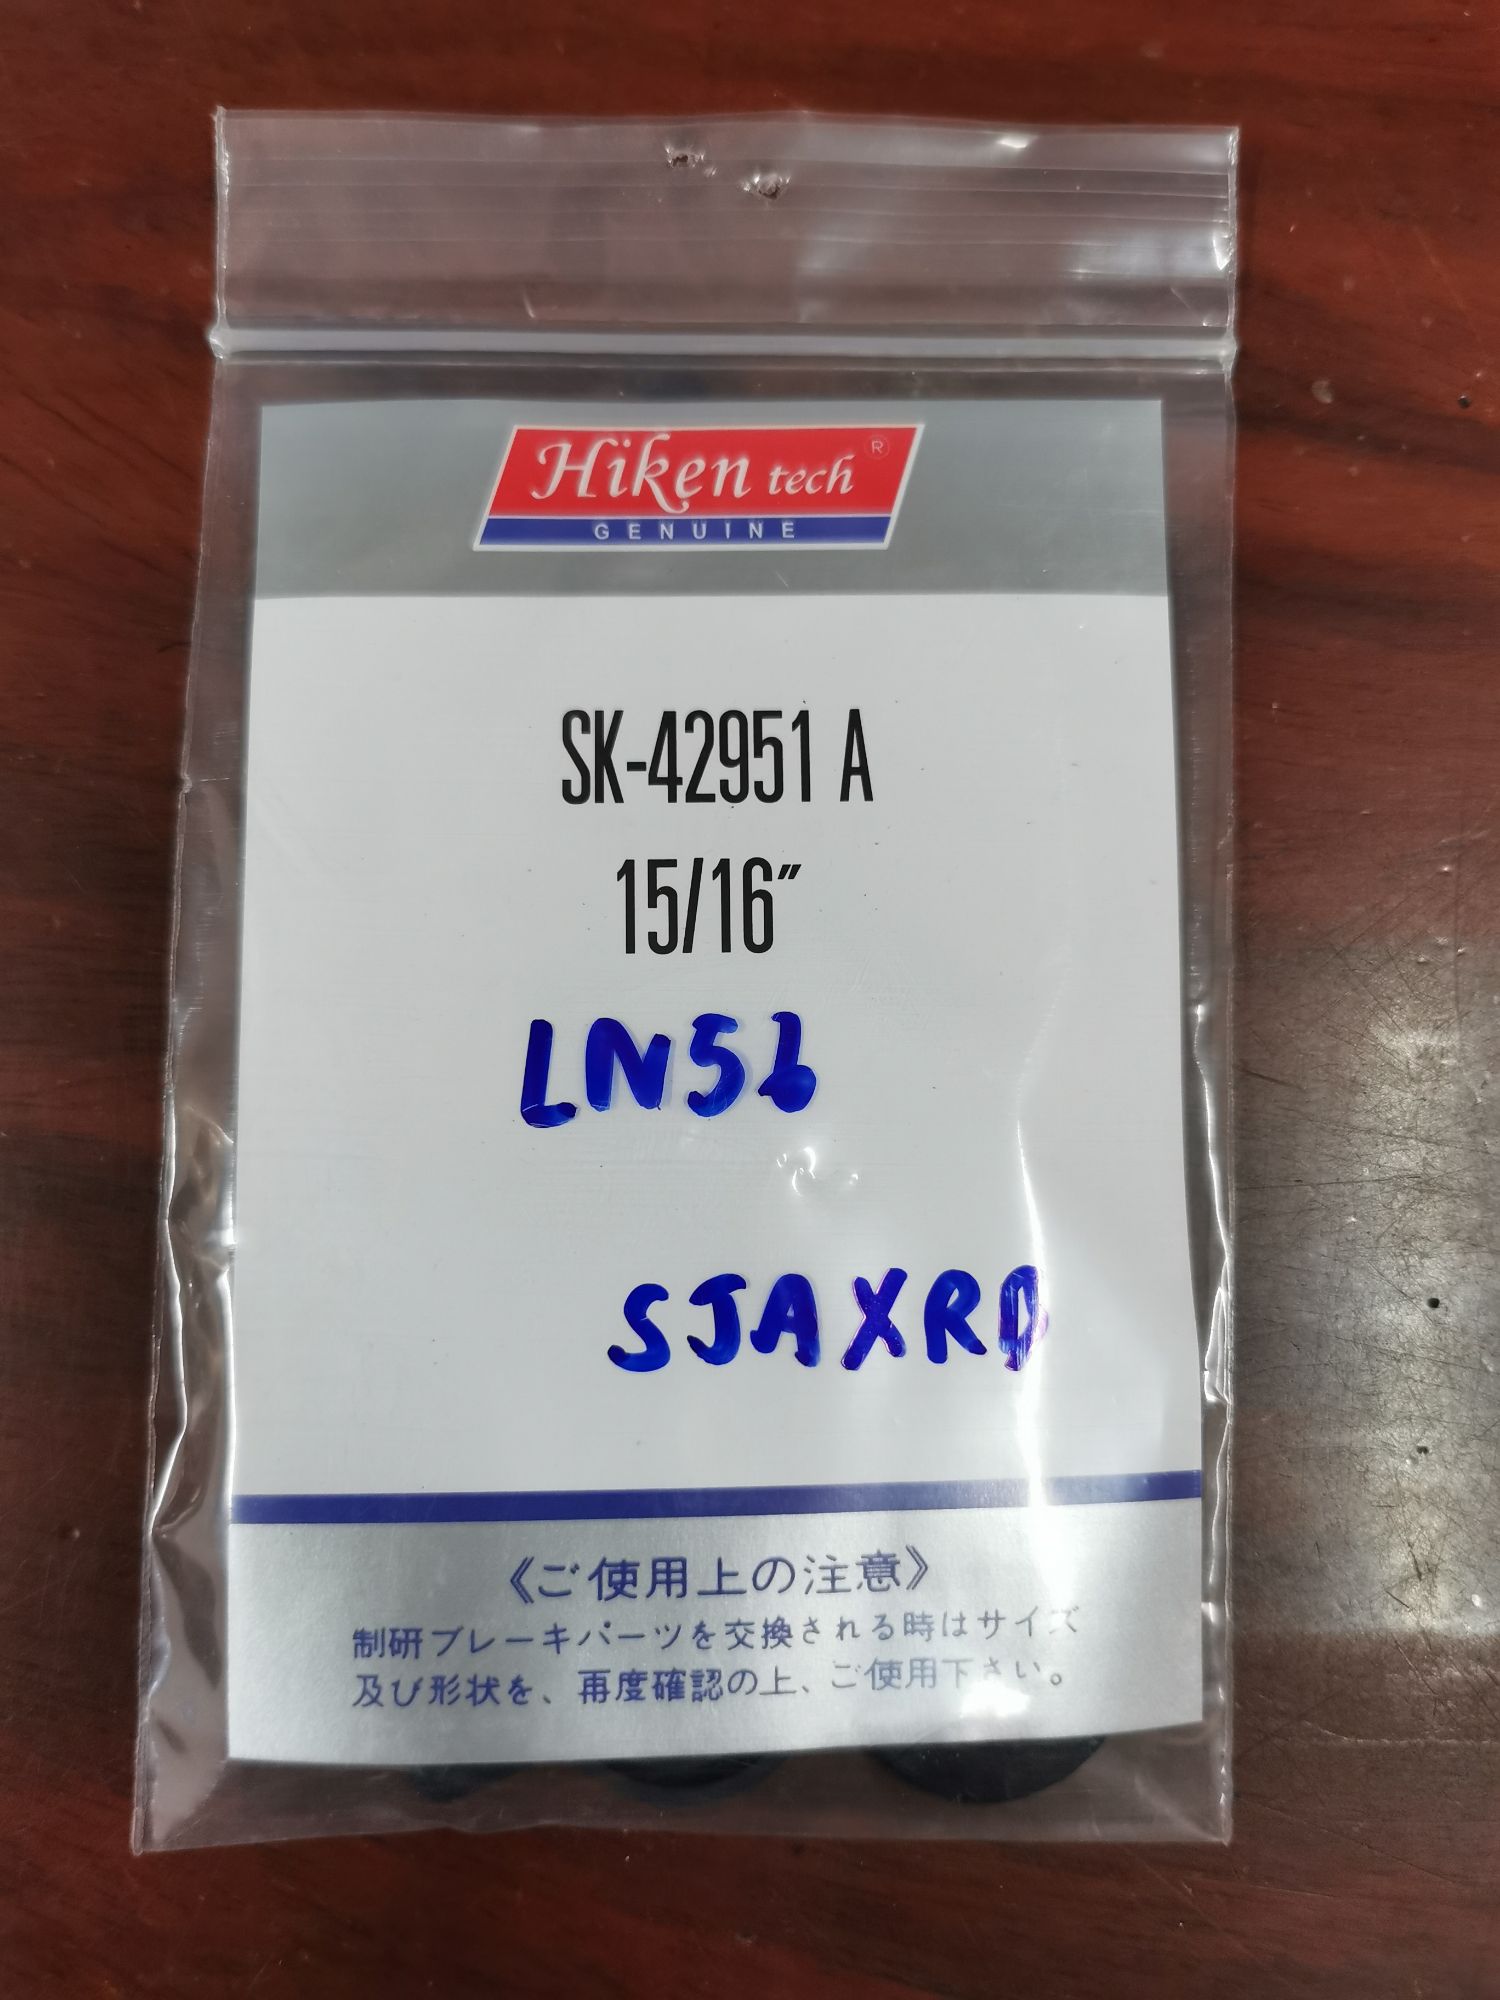 (Hiken SK-42951A)​ ยางแม่ปั้มเบรค​ ยางเบรค​ TOYOTA​ Hero LN56​ 15/16